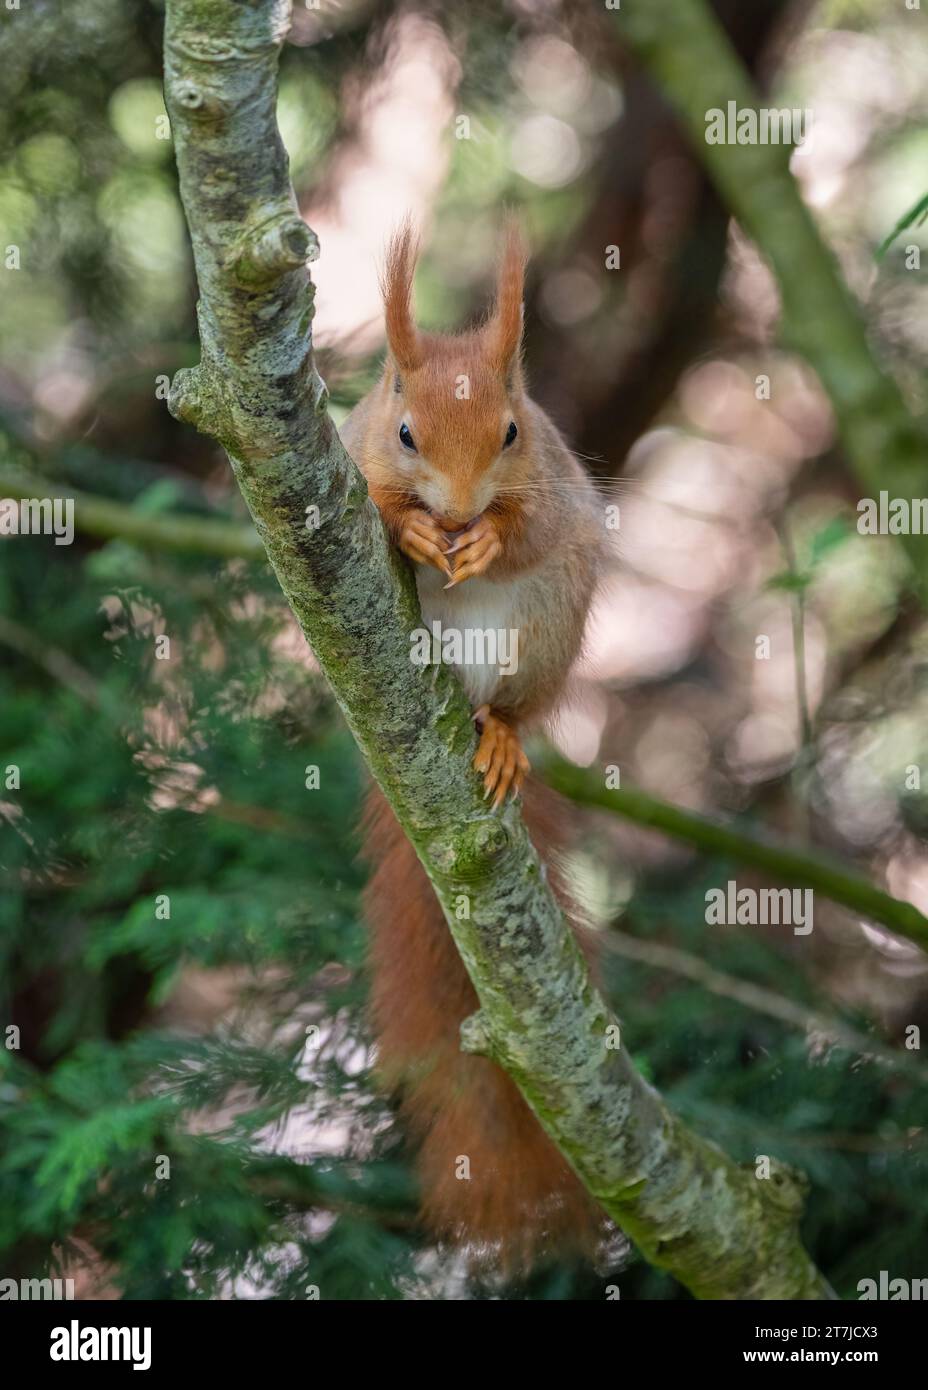 A Red Squirrel (Sciurus Vulgaris) feeding in its enclosure at British Wildlife Centre, Lingfield, Surrey, England, UK Stock Photo